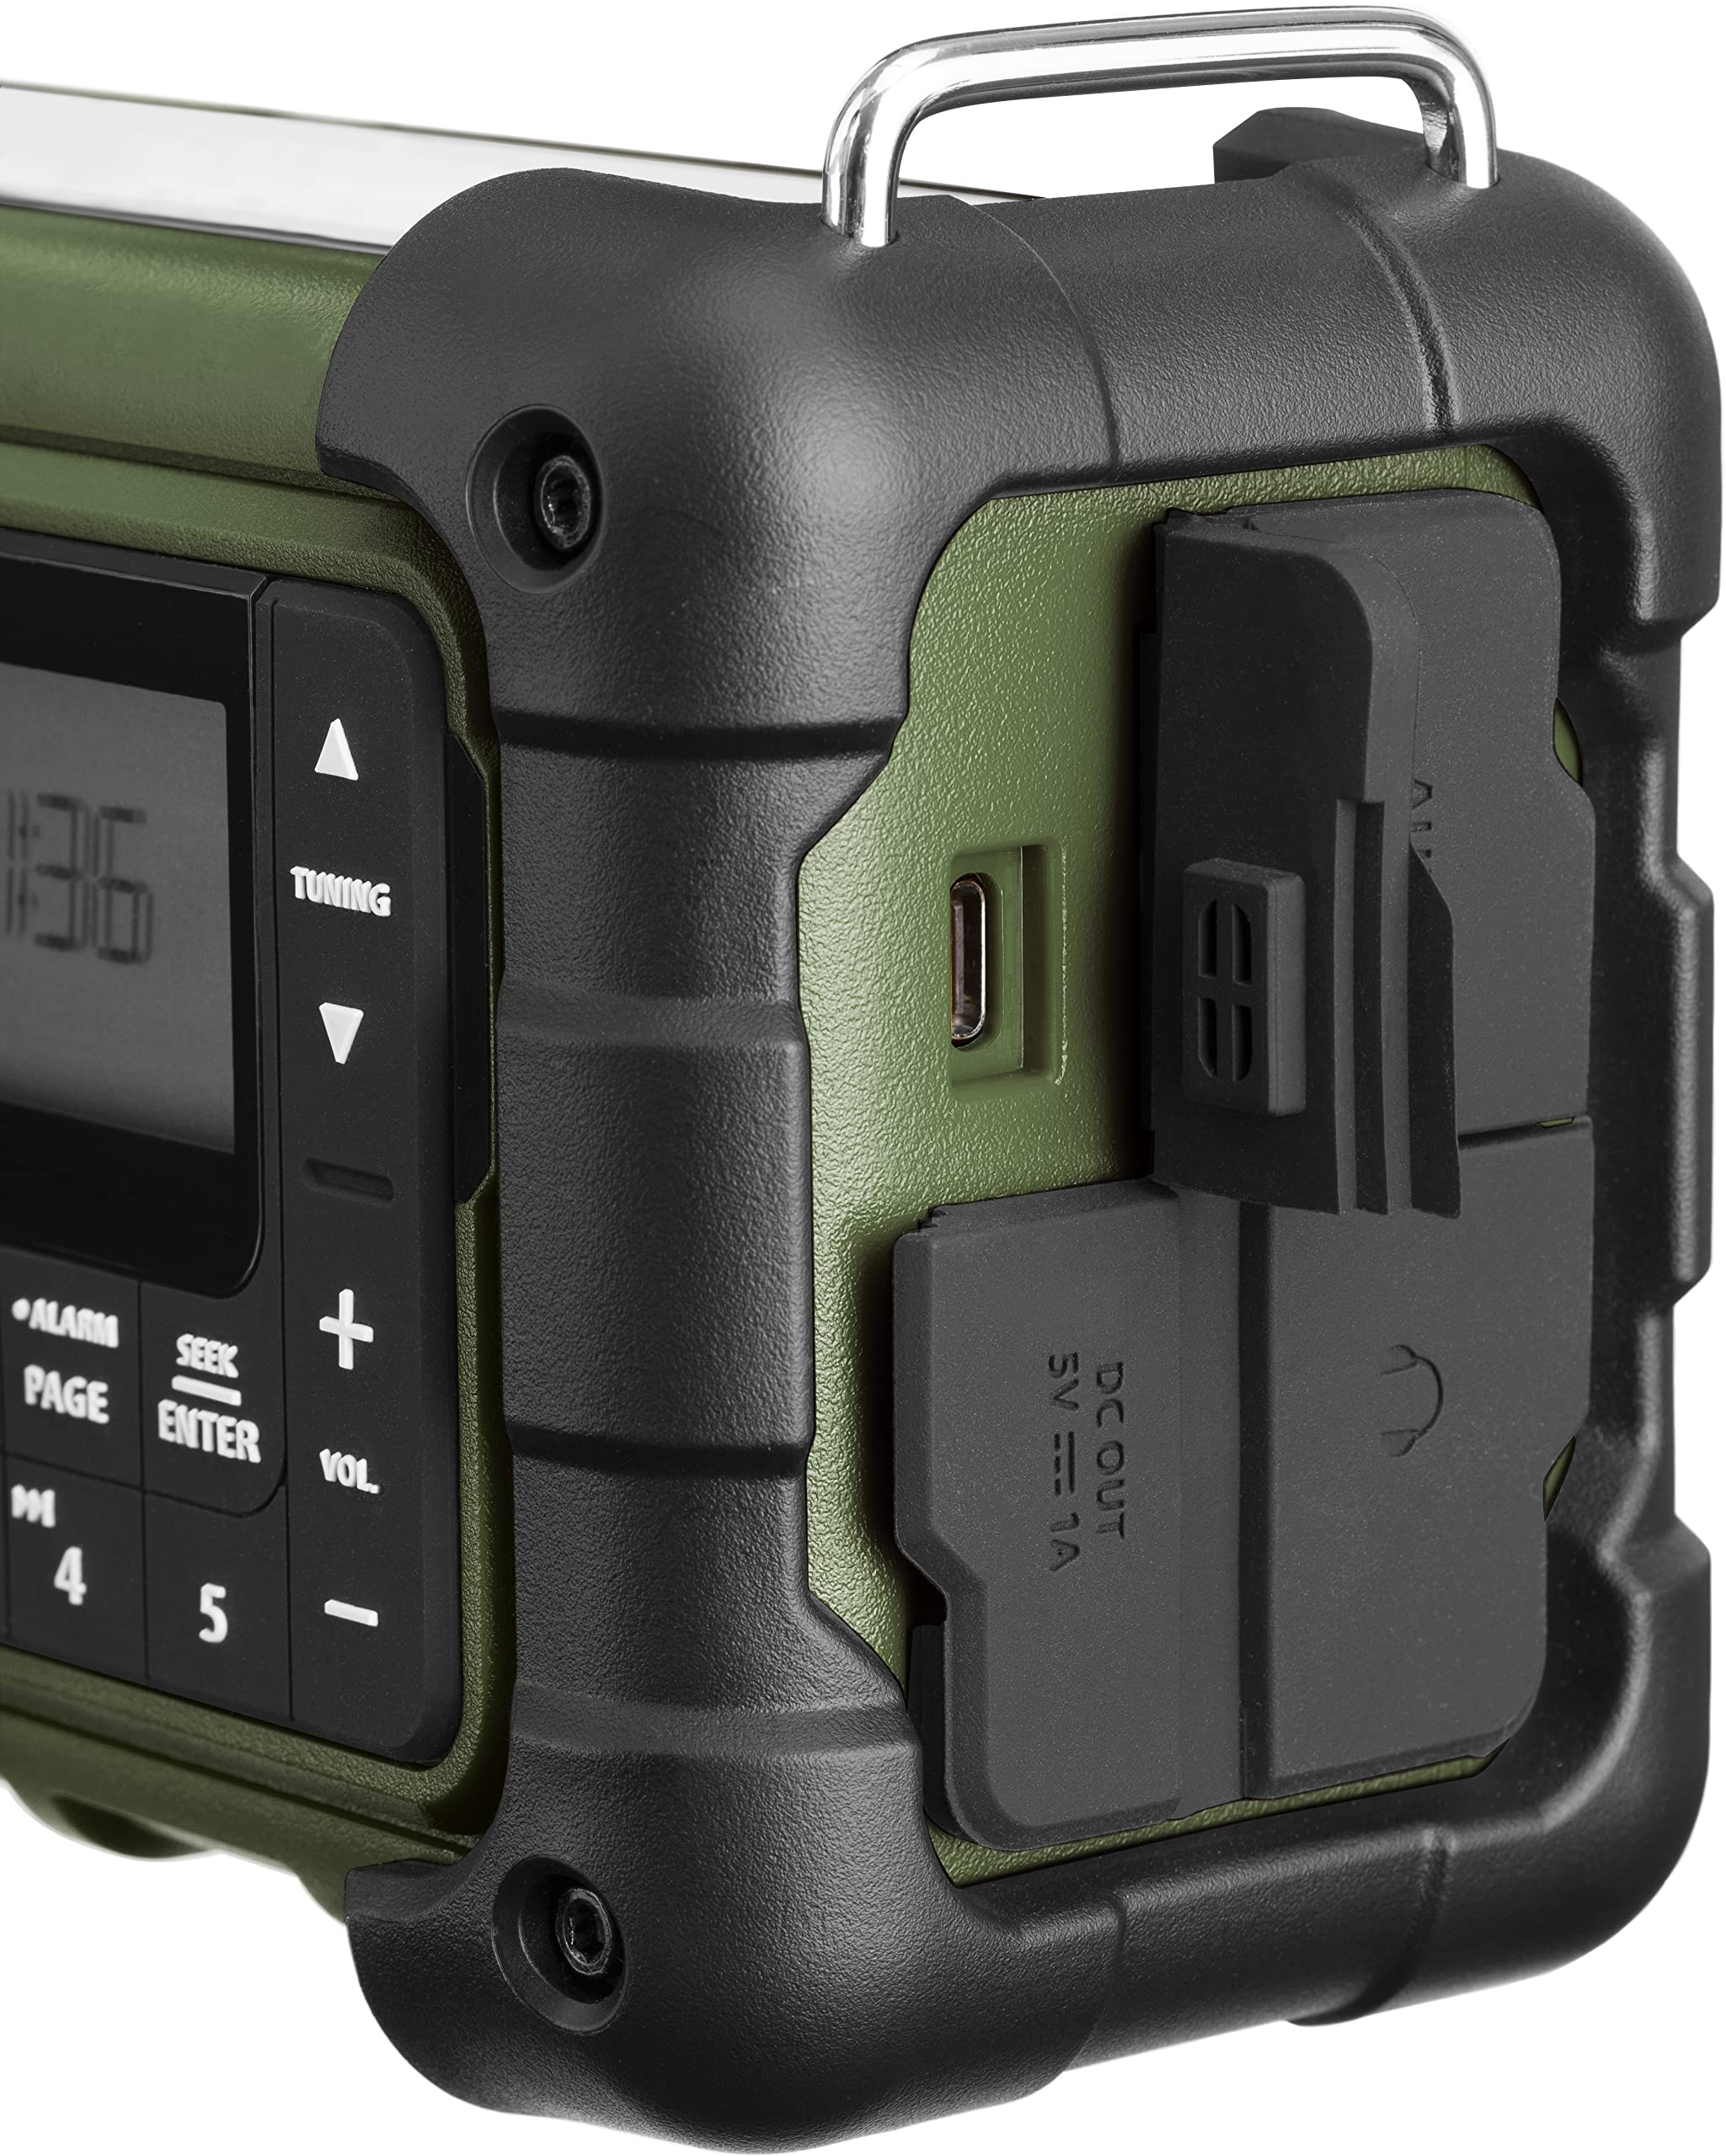 Sangean MMR-99 AM/FM-RBDS/Bluetooth/AUX/Weather/Multi-Powered Digital Tuning Emergency Radio, Forest Green